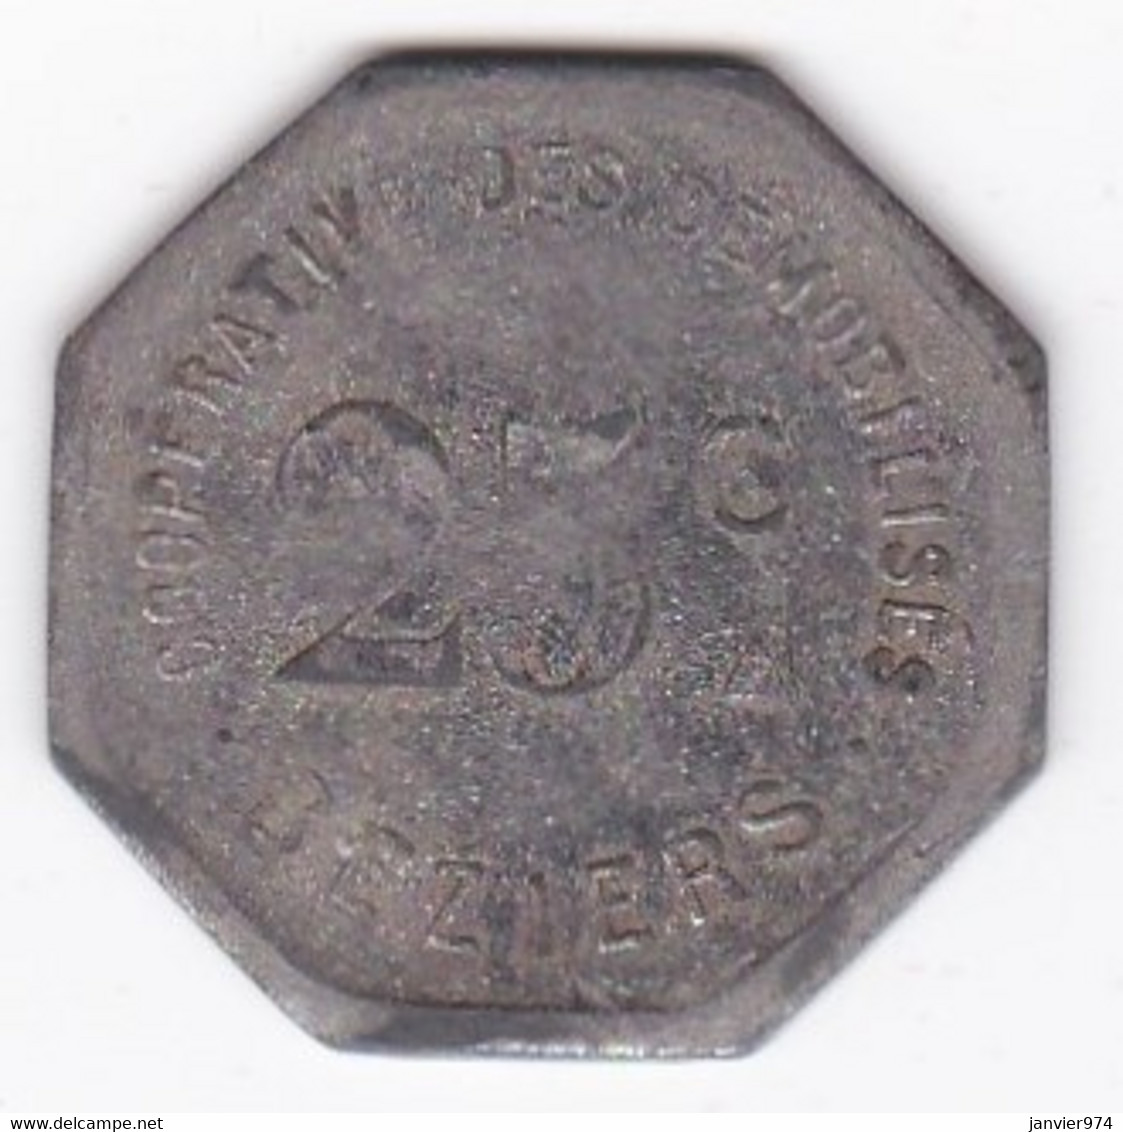 34 Hérault. Béziers, Coopérative Des Démobilisés 25 Centimes, En Zinc Nickelé Octogonal - Monetary / Of Necessity